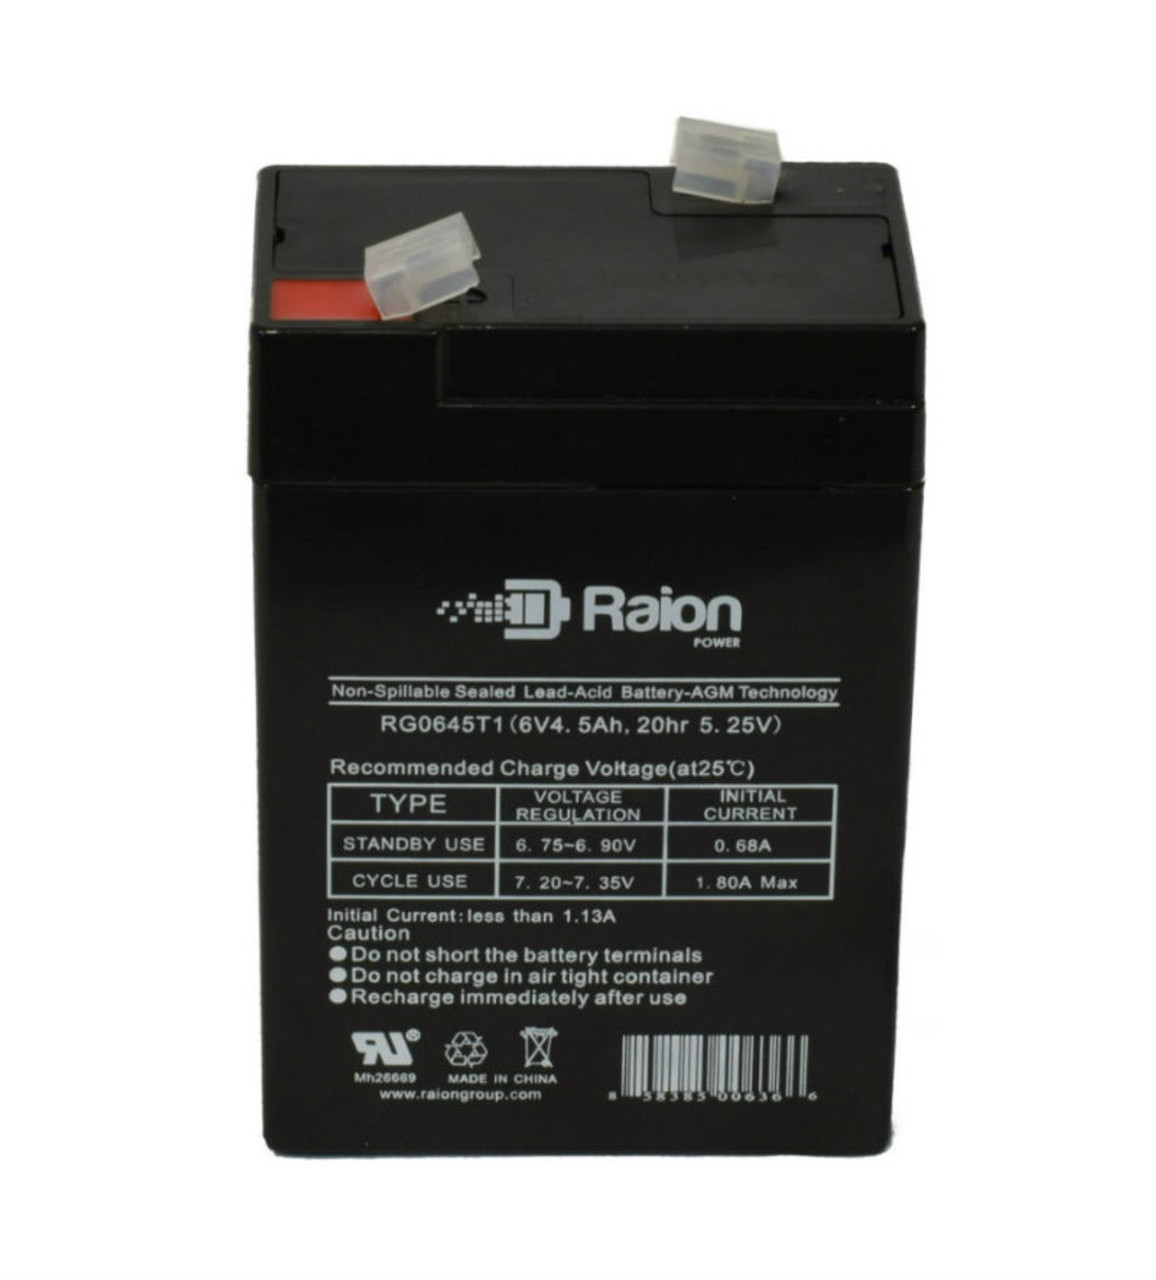 Raion Power RG0645T1 Replacement Battery Cartridge for Emergi-Lite CSM1